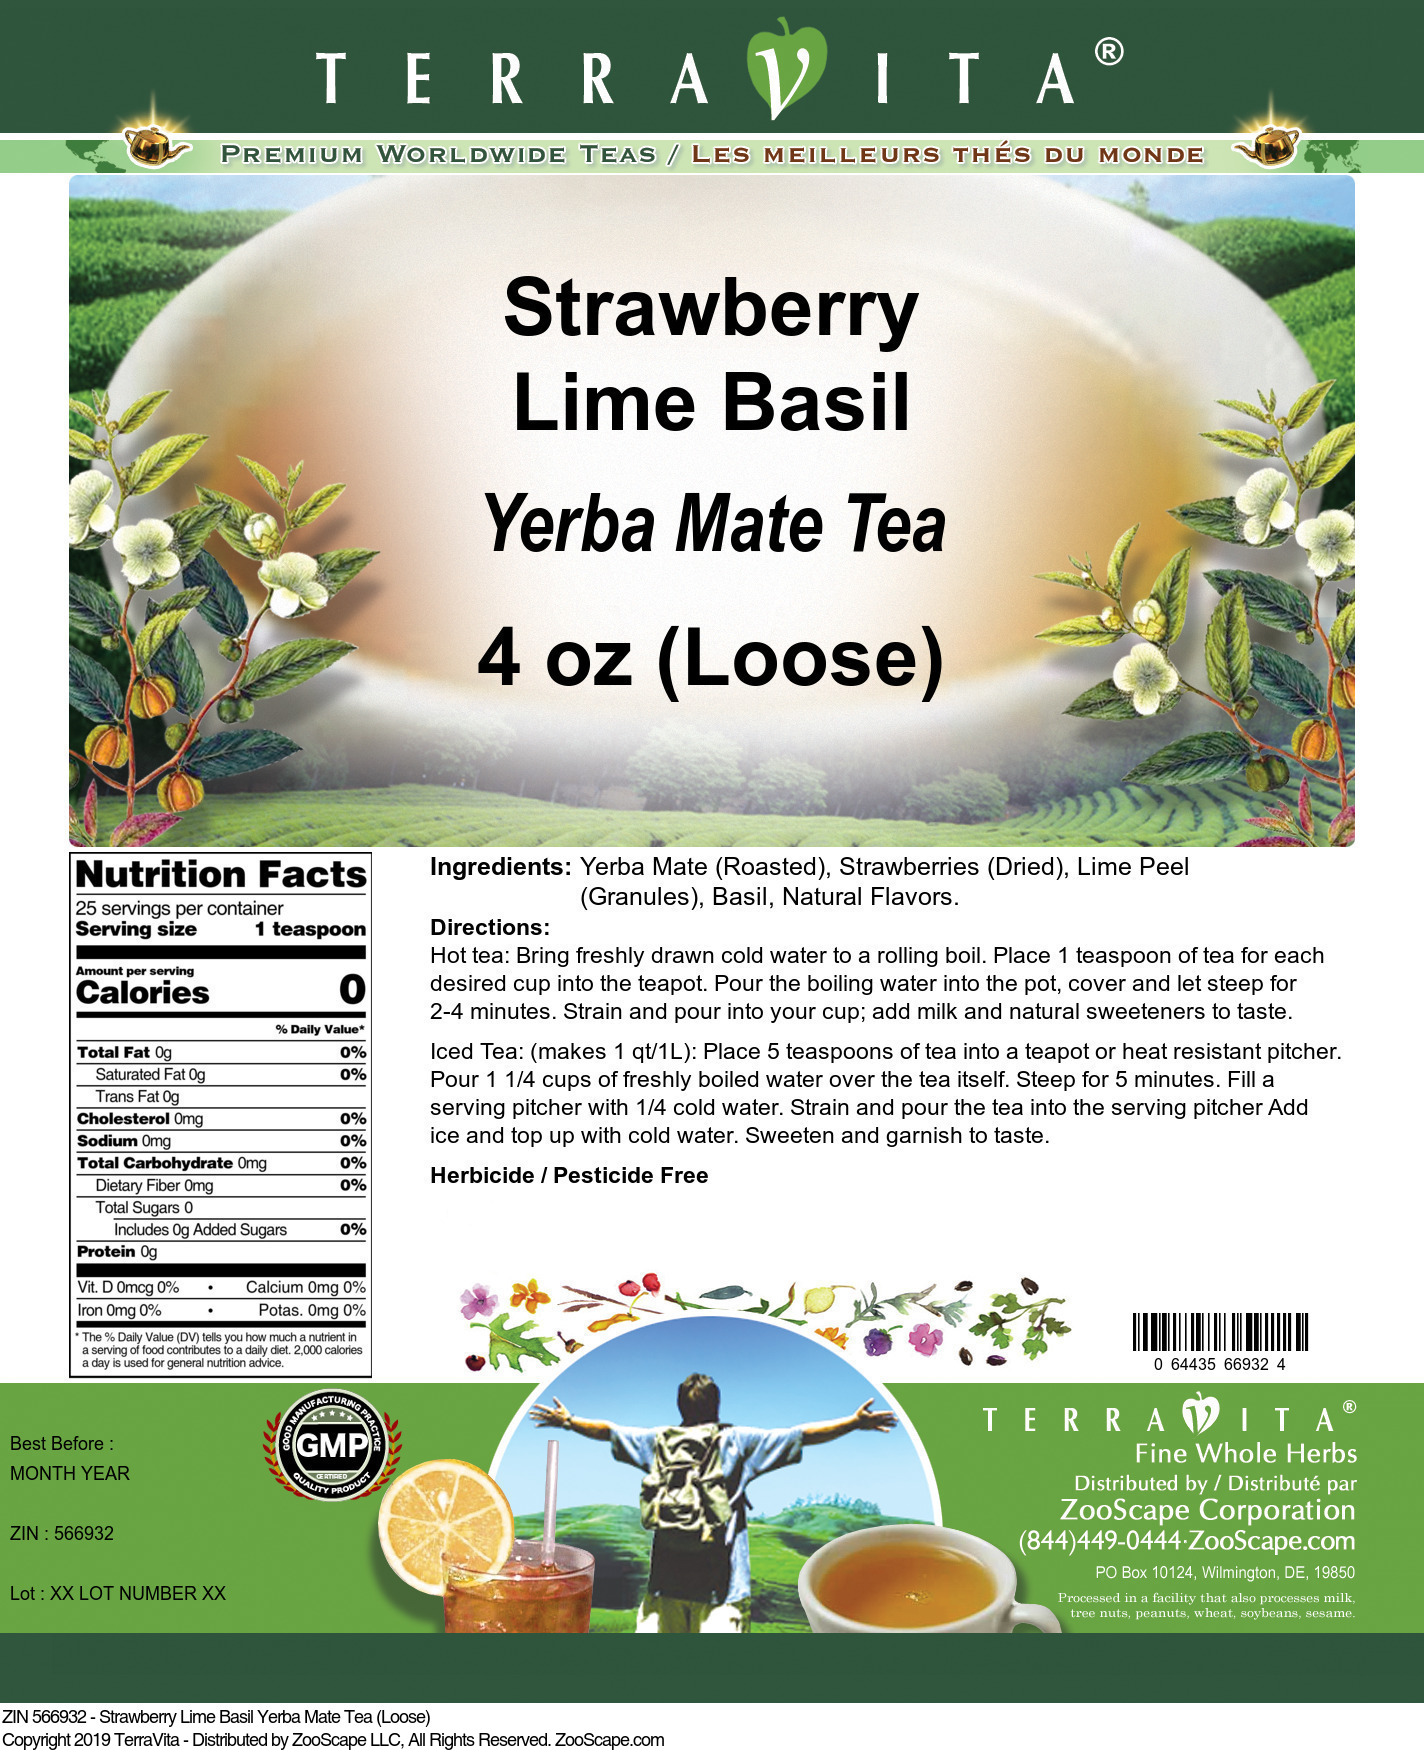 Strawberry Lime Basil Yerba Mate Tea (Loose) - Label